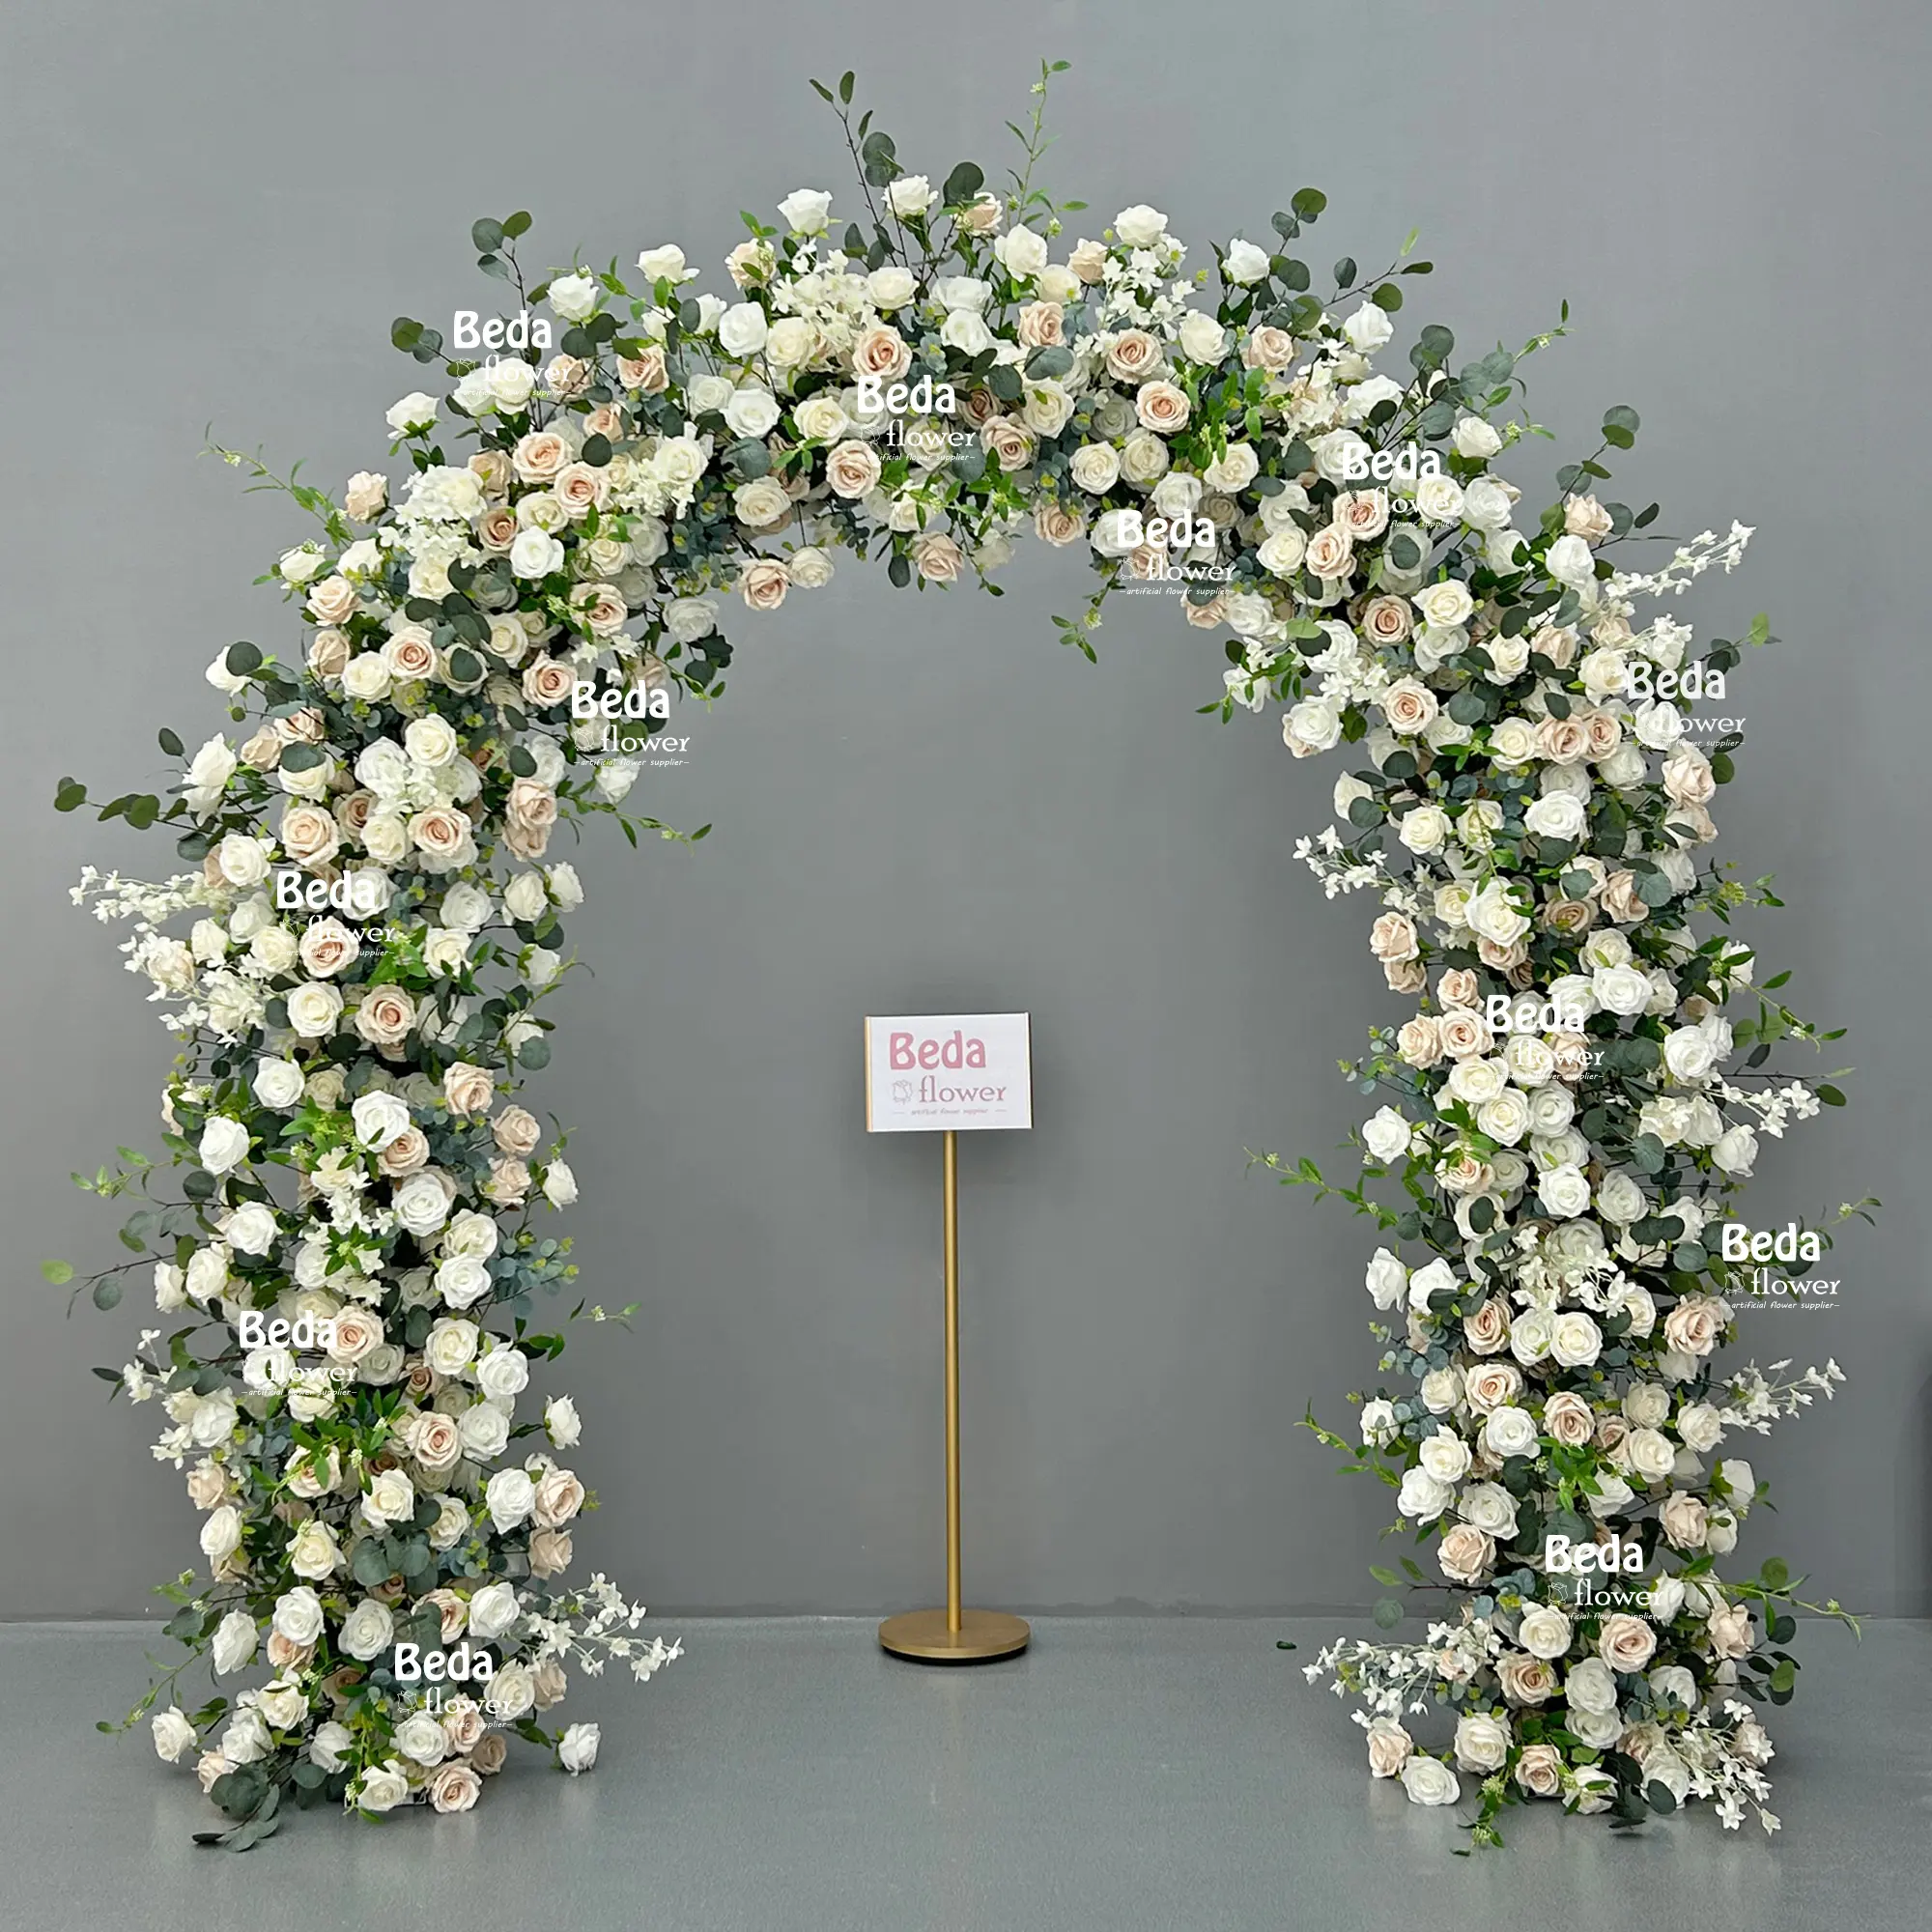 Beda 5D Full Sides with Flower floral arrangement Flower Arch Wedding Backdrop Wedding Decoration   Home decoration